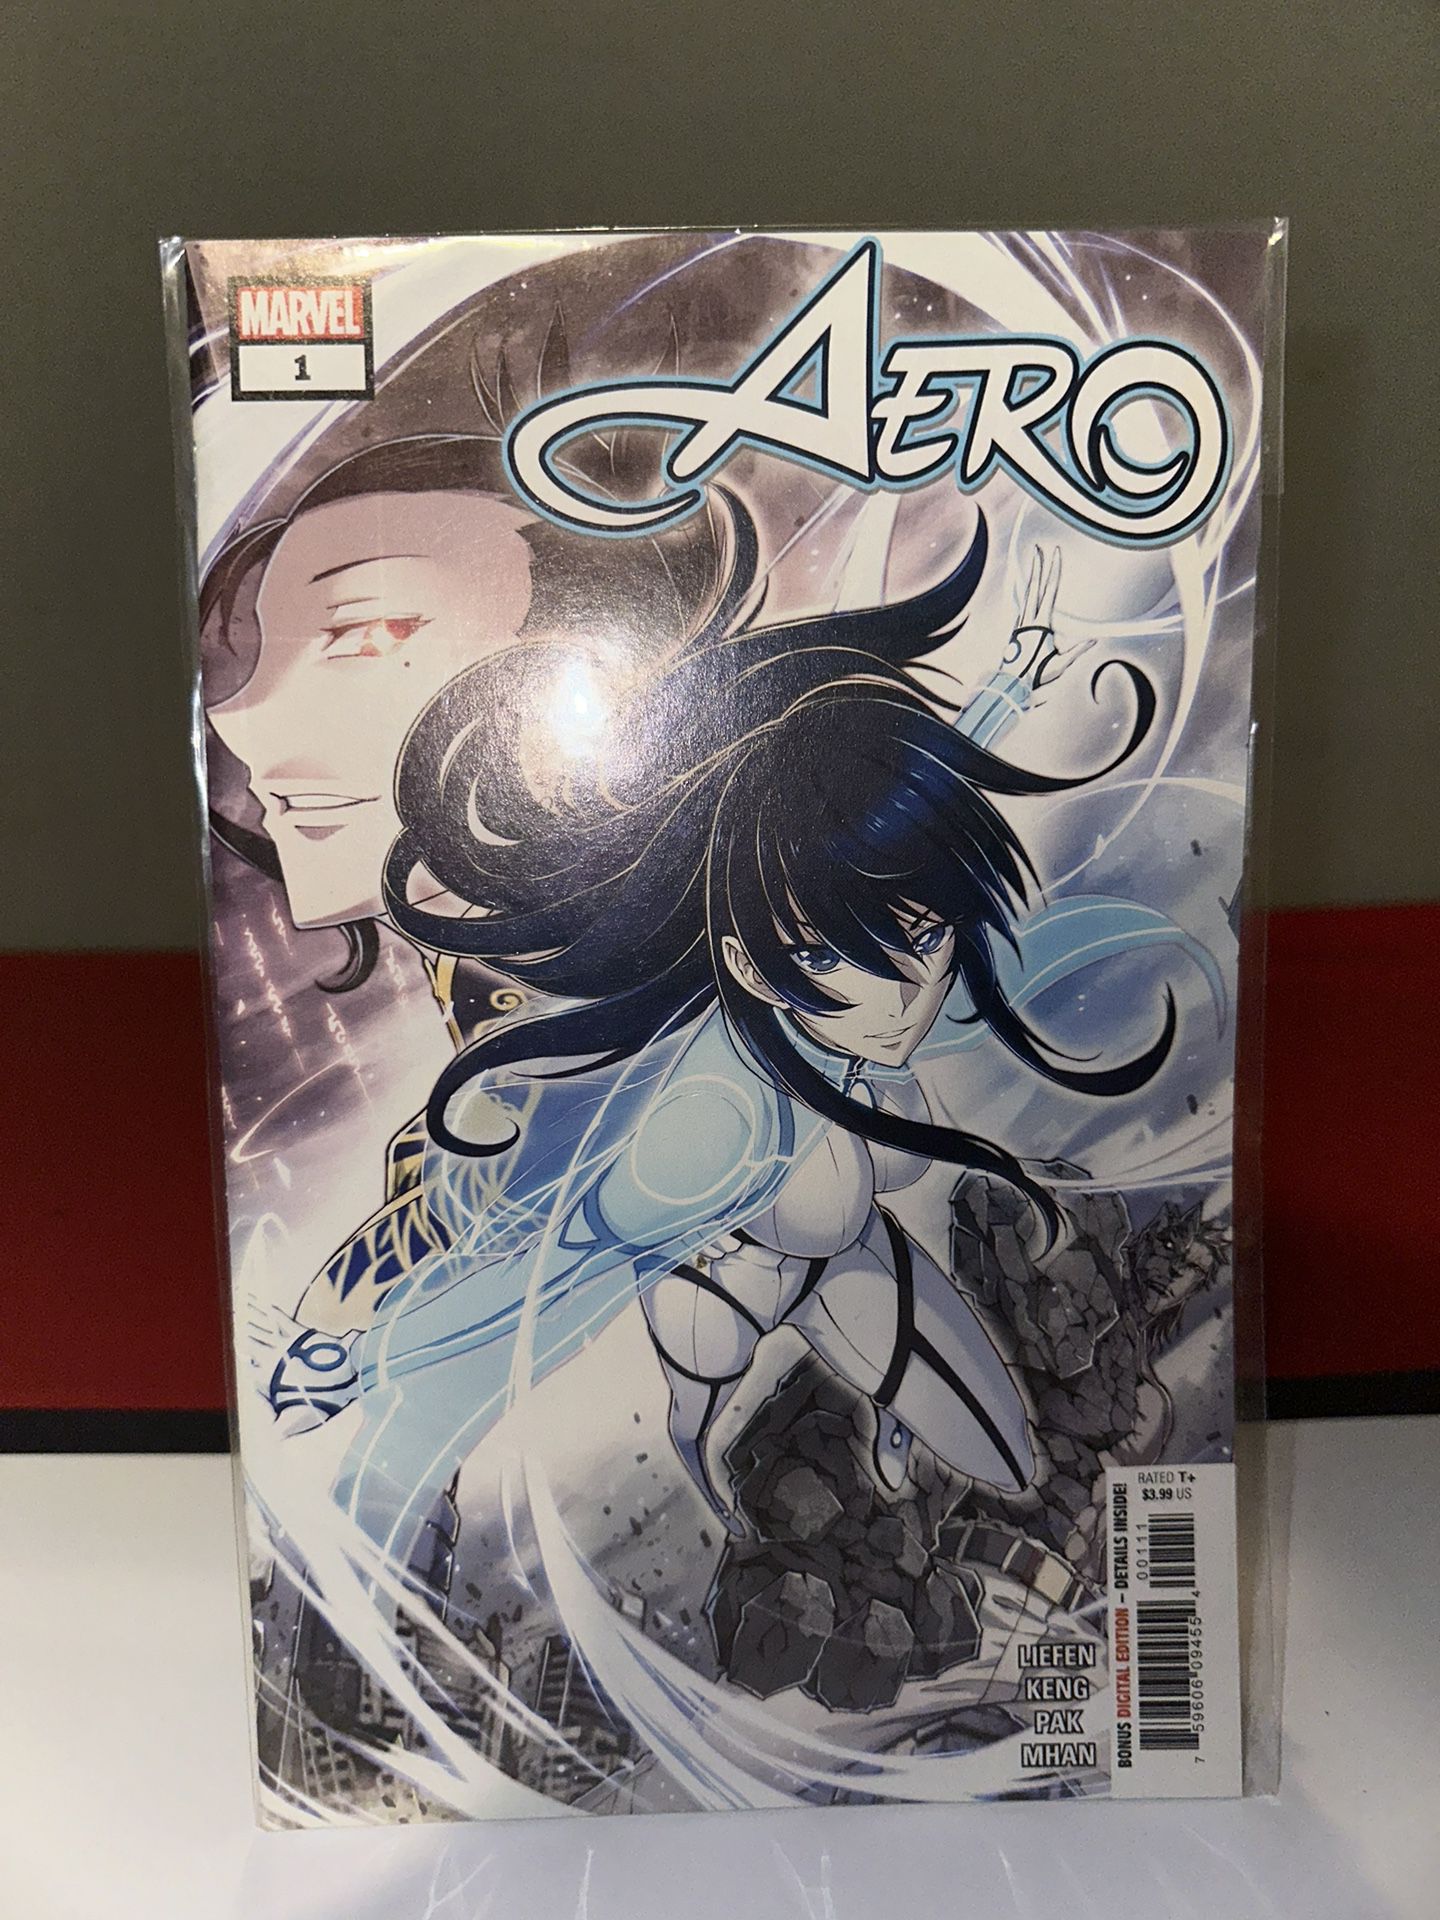 Aero #1 (Marvel Comics September 2019)